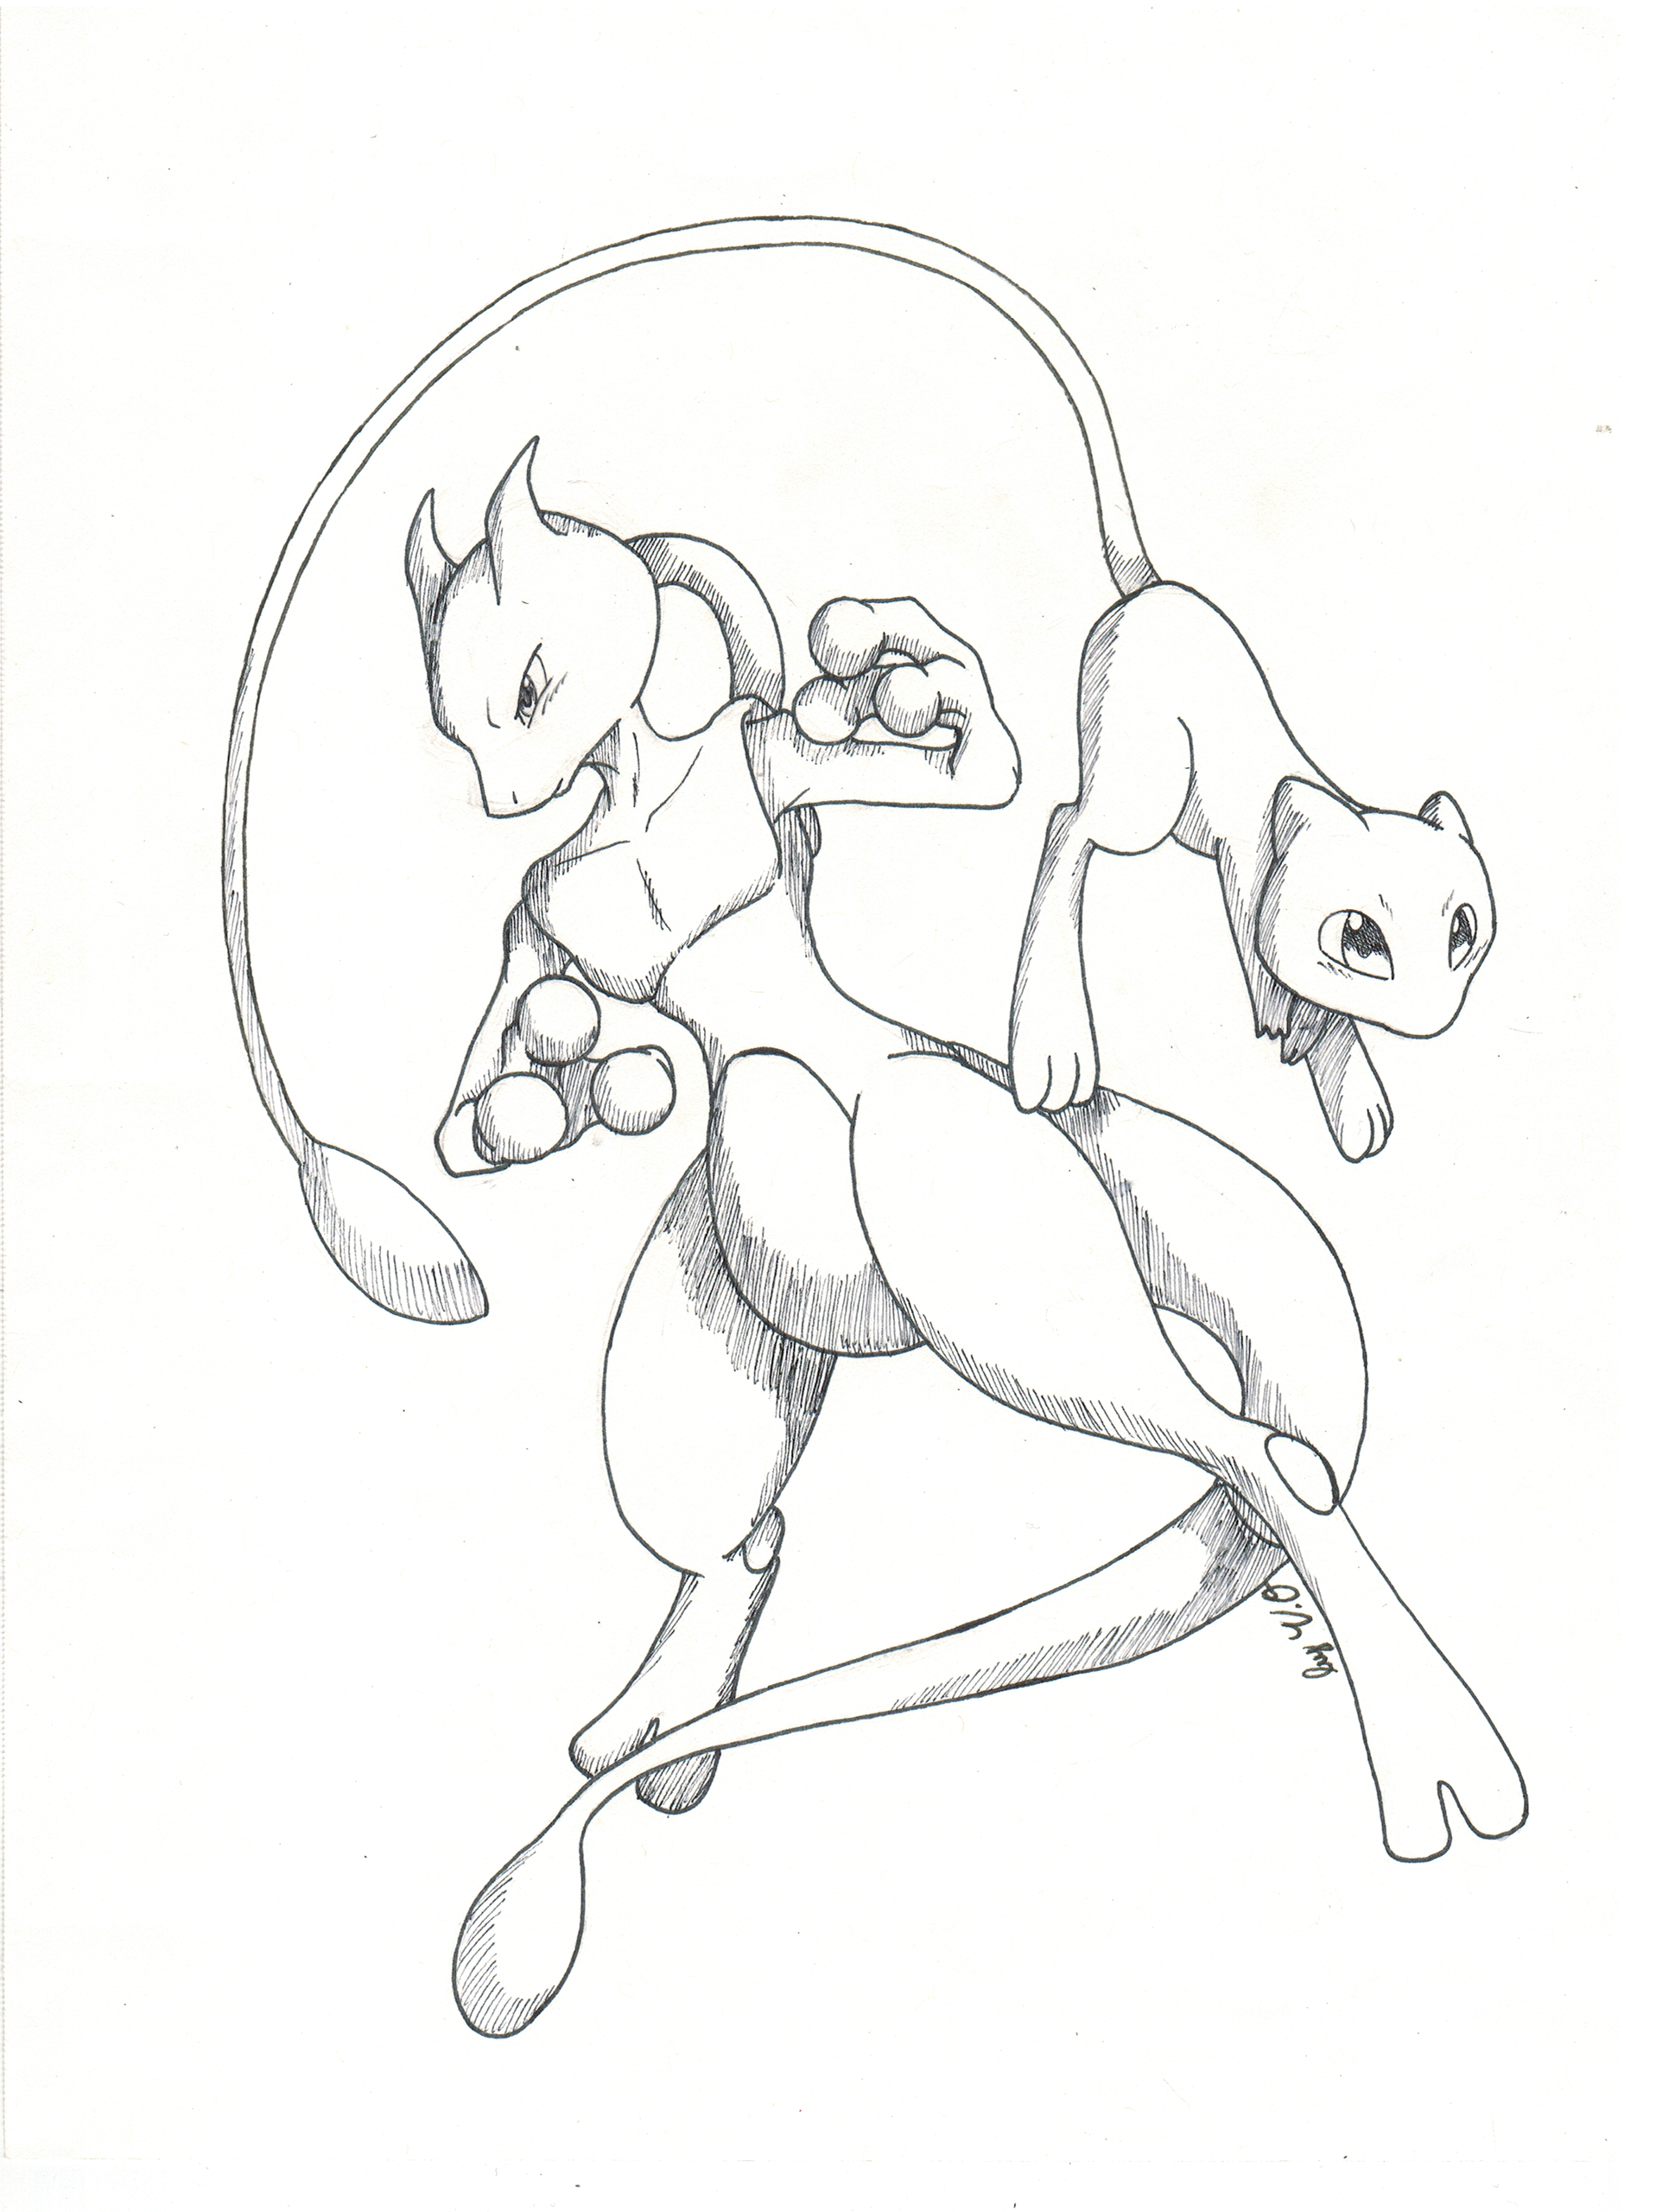 Mew & Mewtwo By Itsbirdy  Pokemon drawings, Pokemon sketch, Pokemon mewtwo